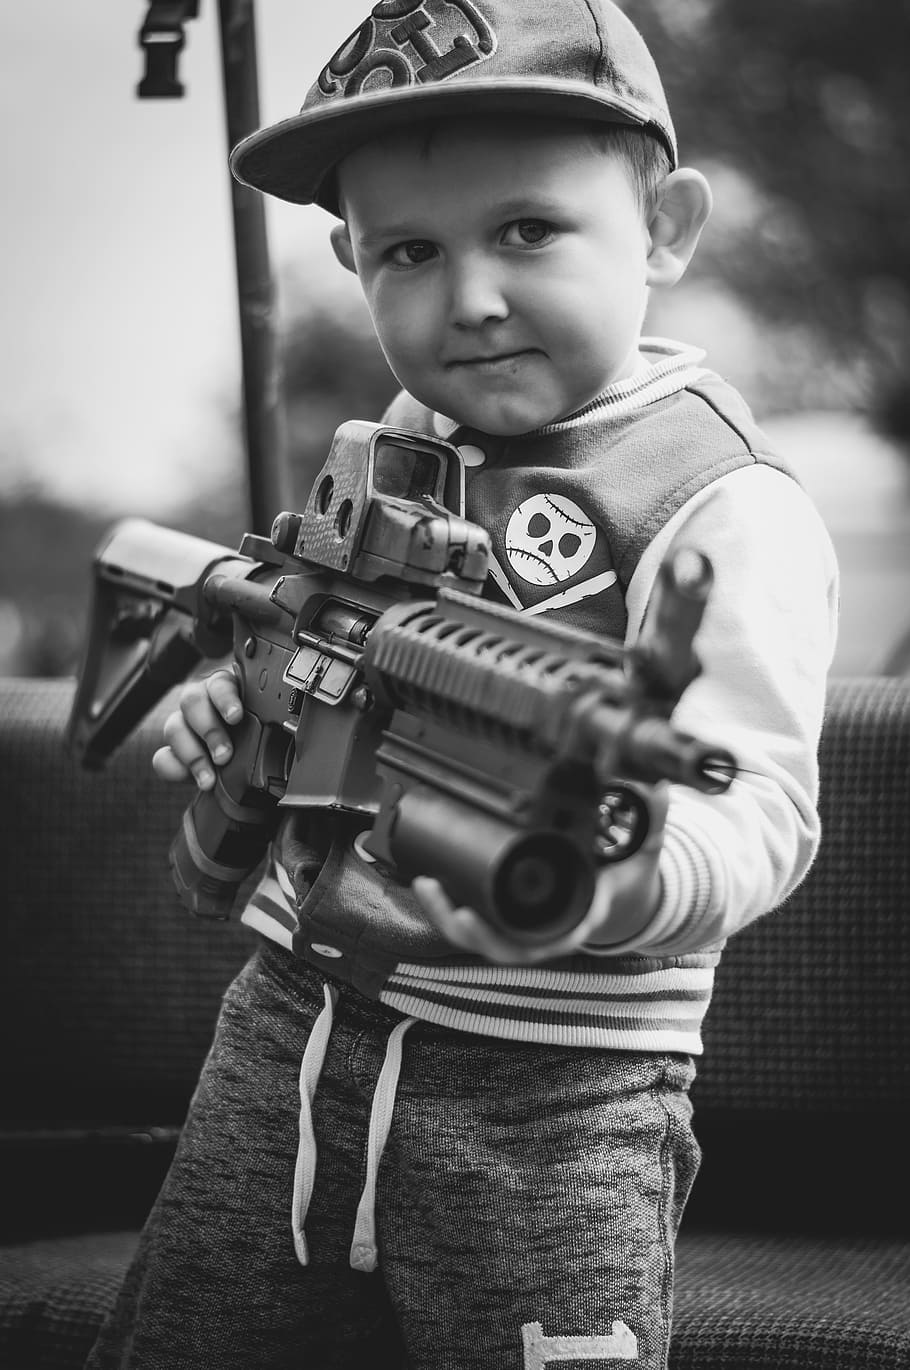 anak laki-laki, anak, potret, militer, senjata, senapan, menembak, unggul, pria, masa kanak-kanak